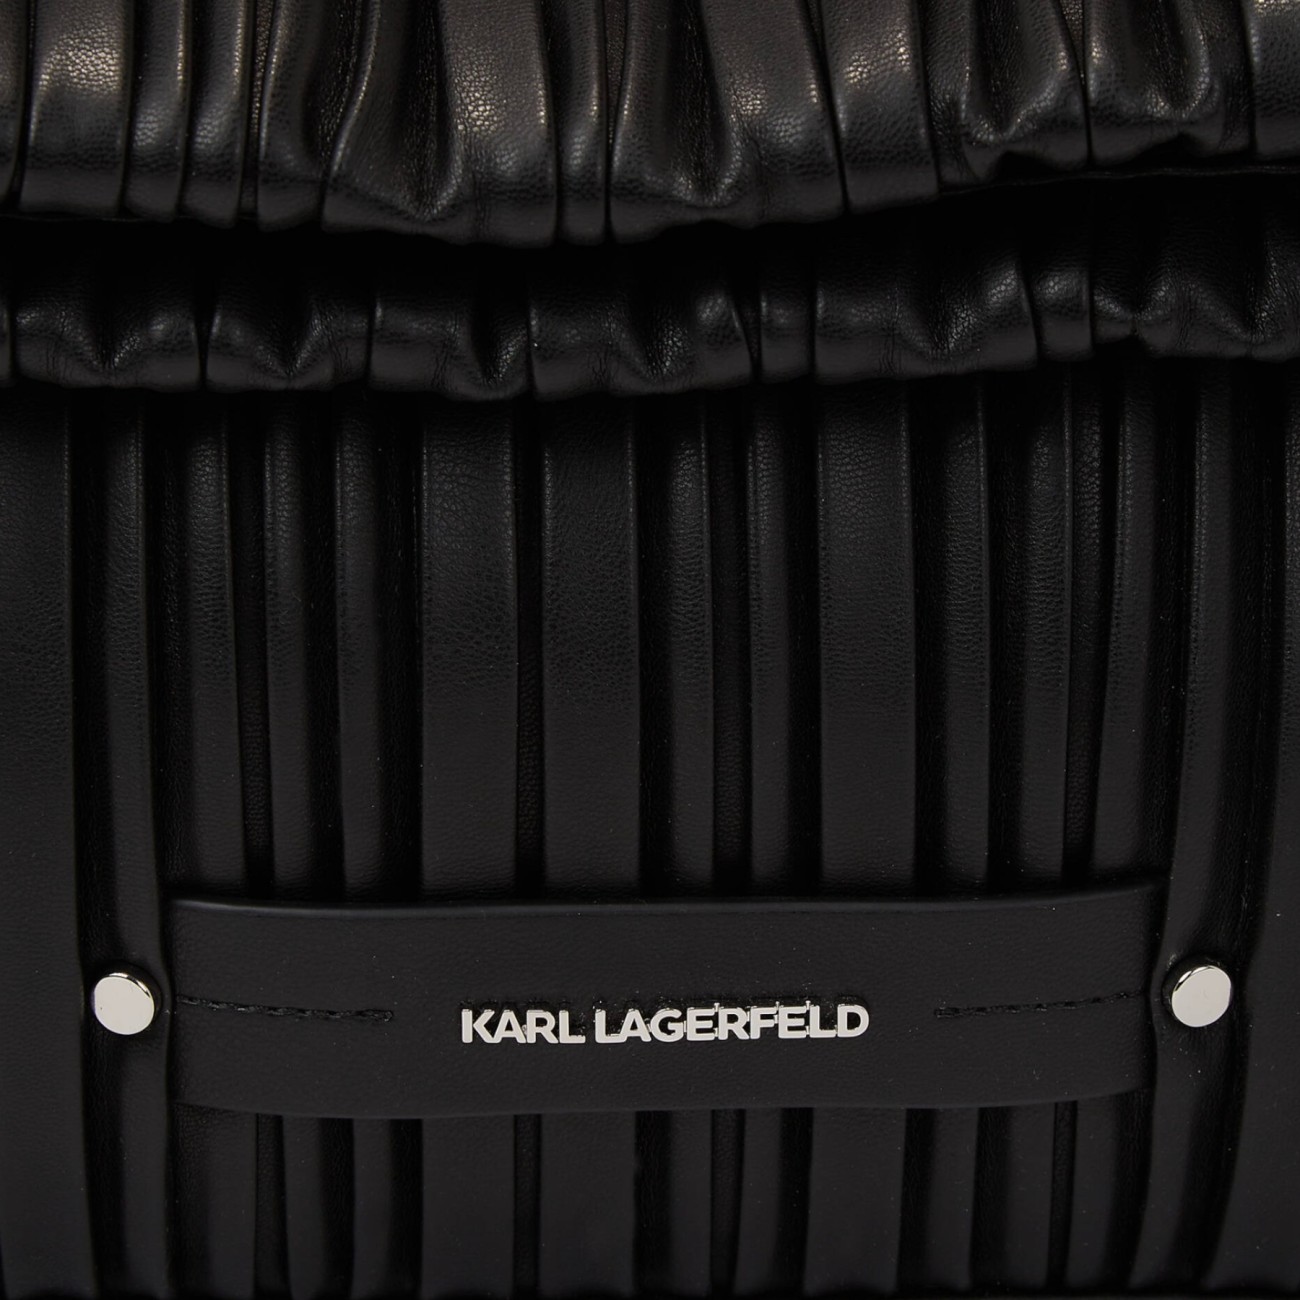 Karl Lagerfeld borsa...